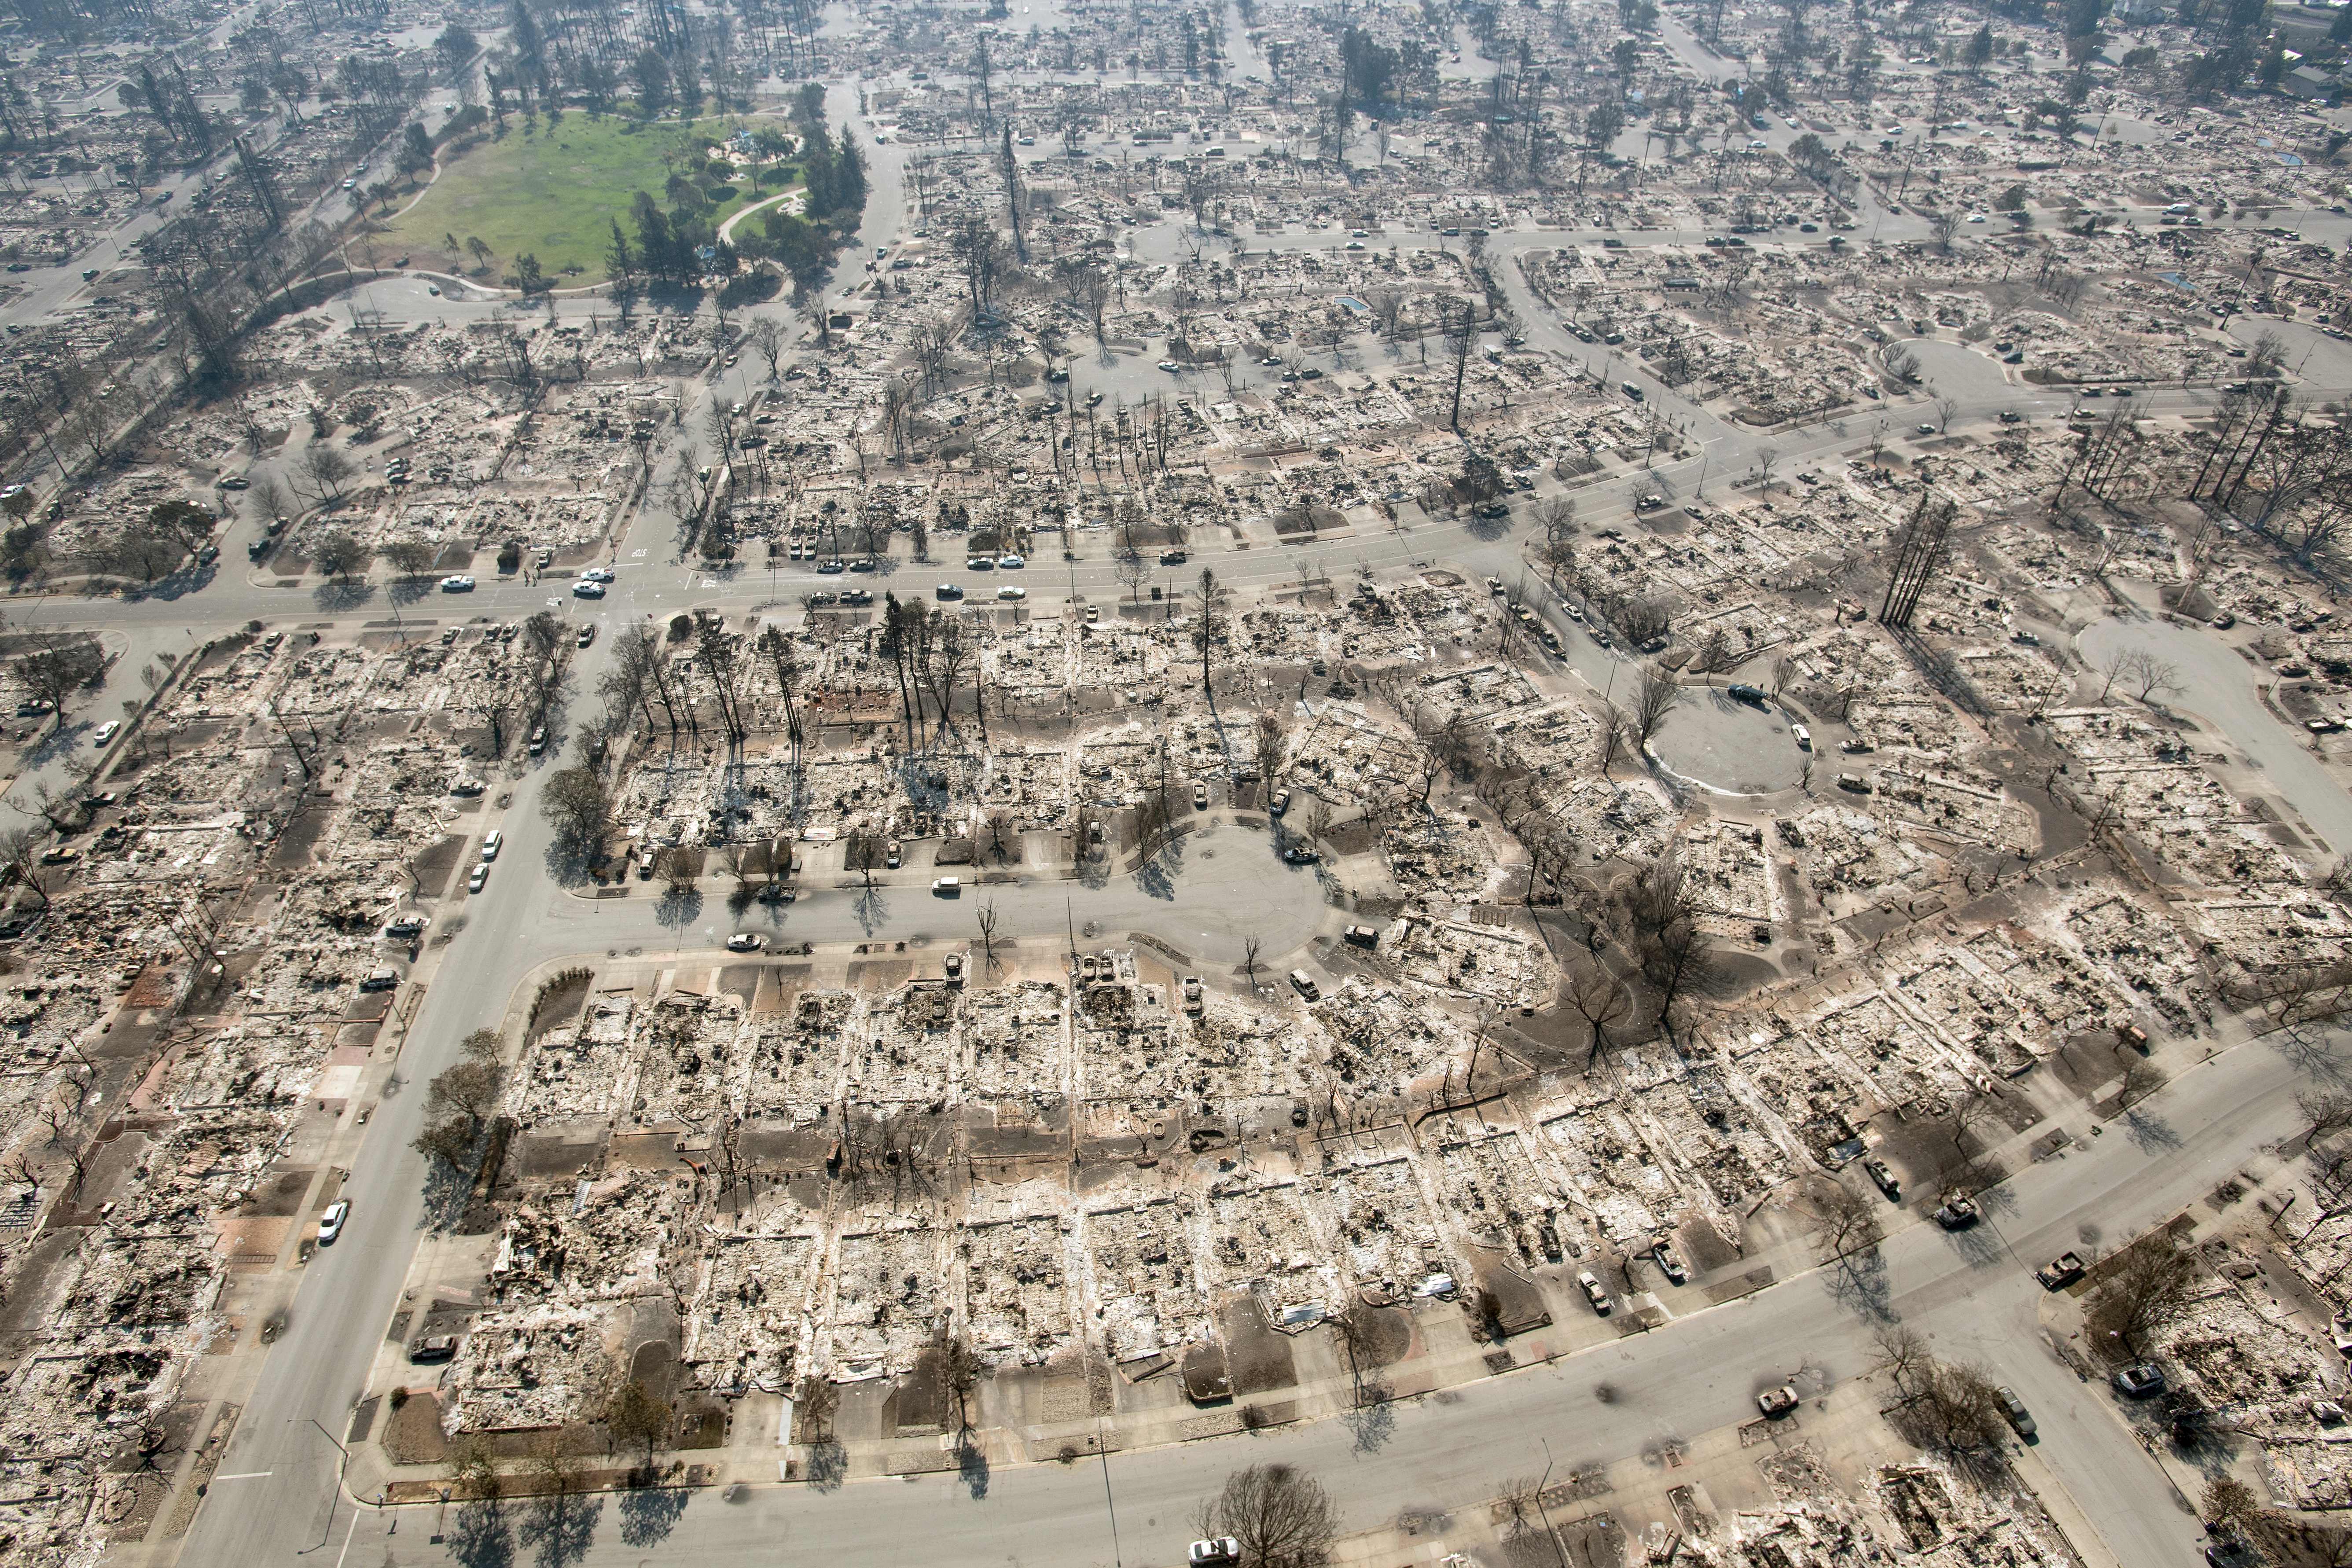 Santa Rosa, California, after the flames. 